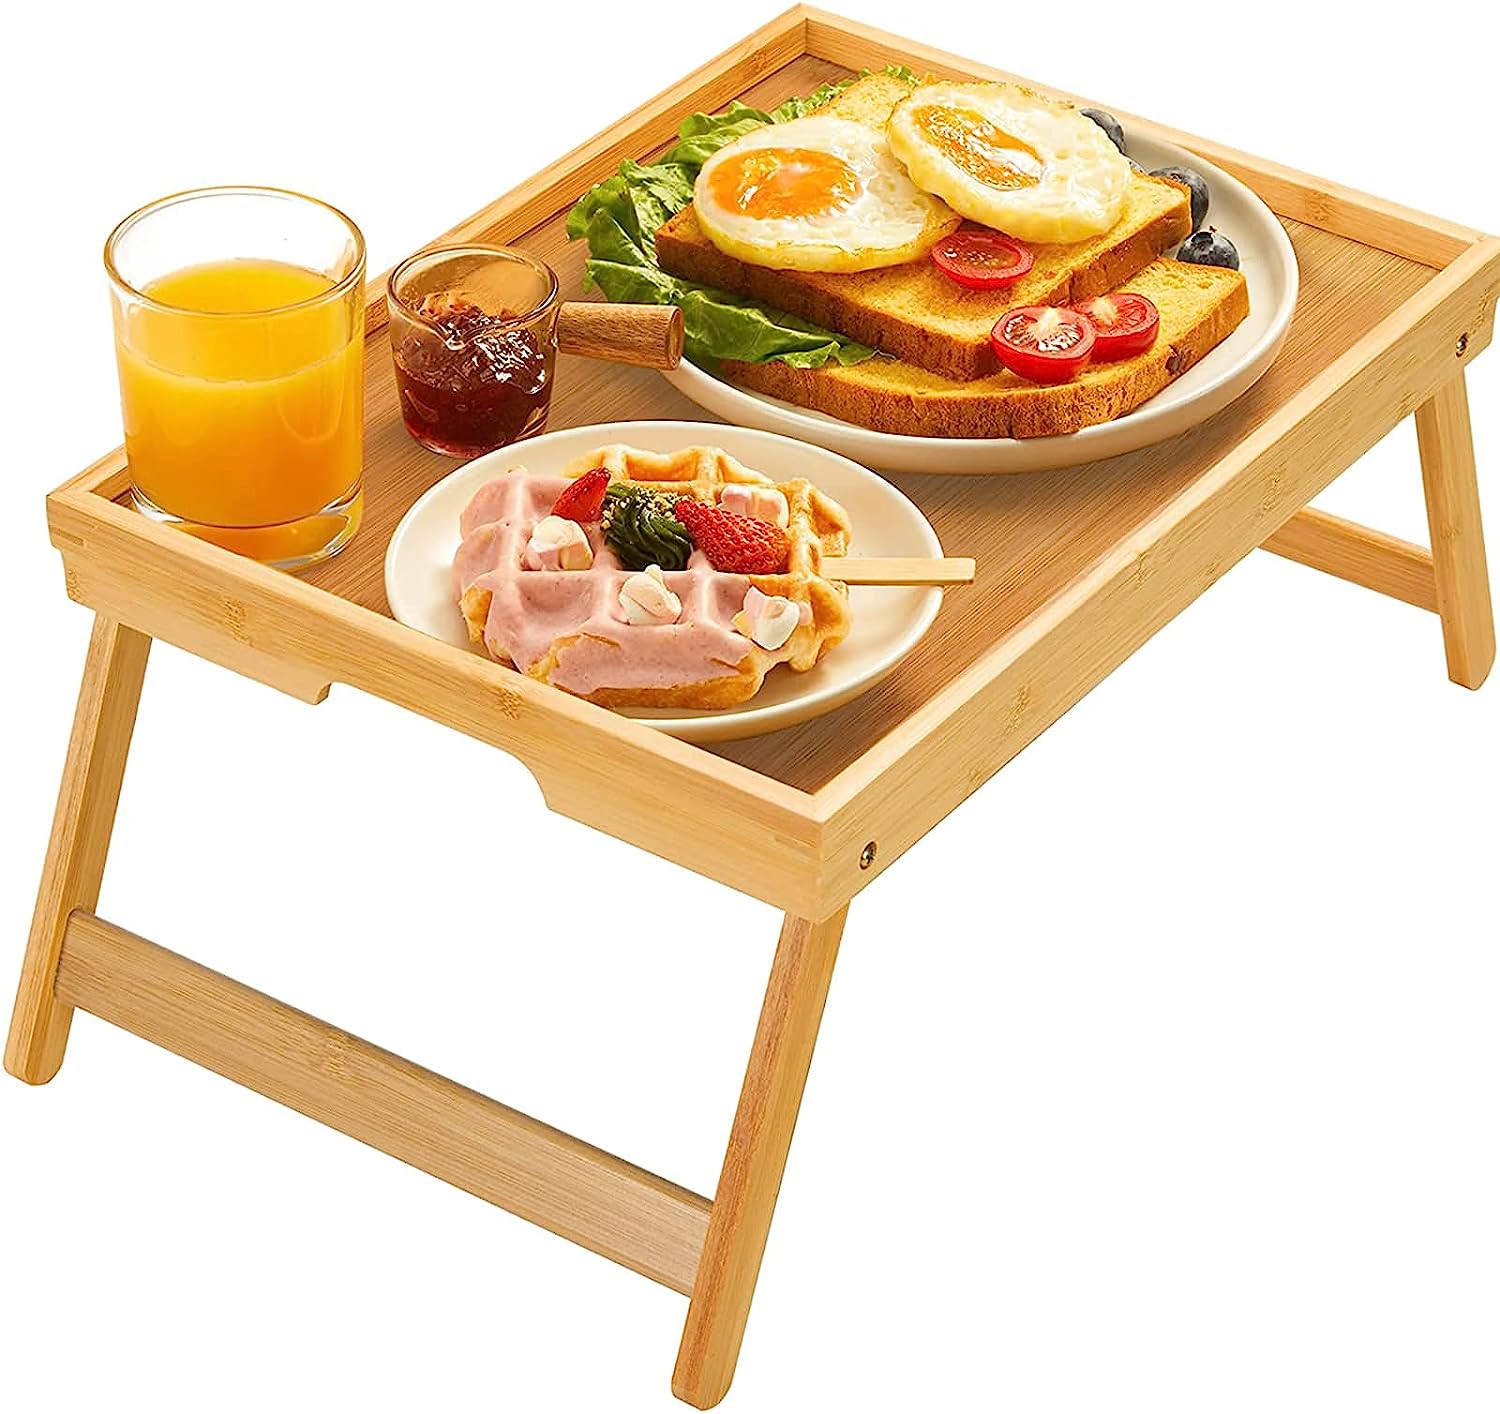 breakfast in bed tray for morning date idea